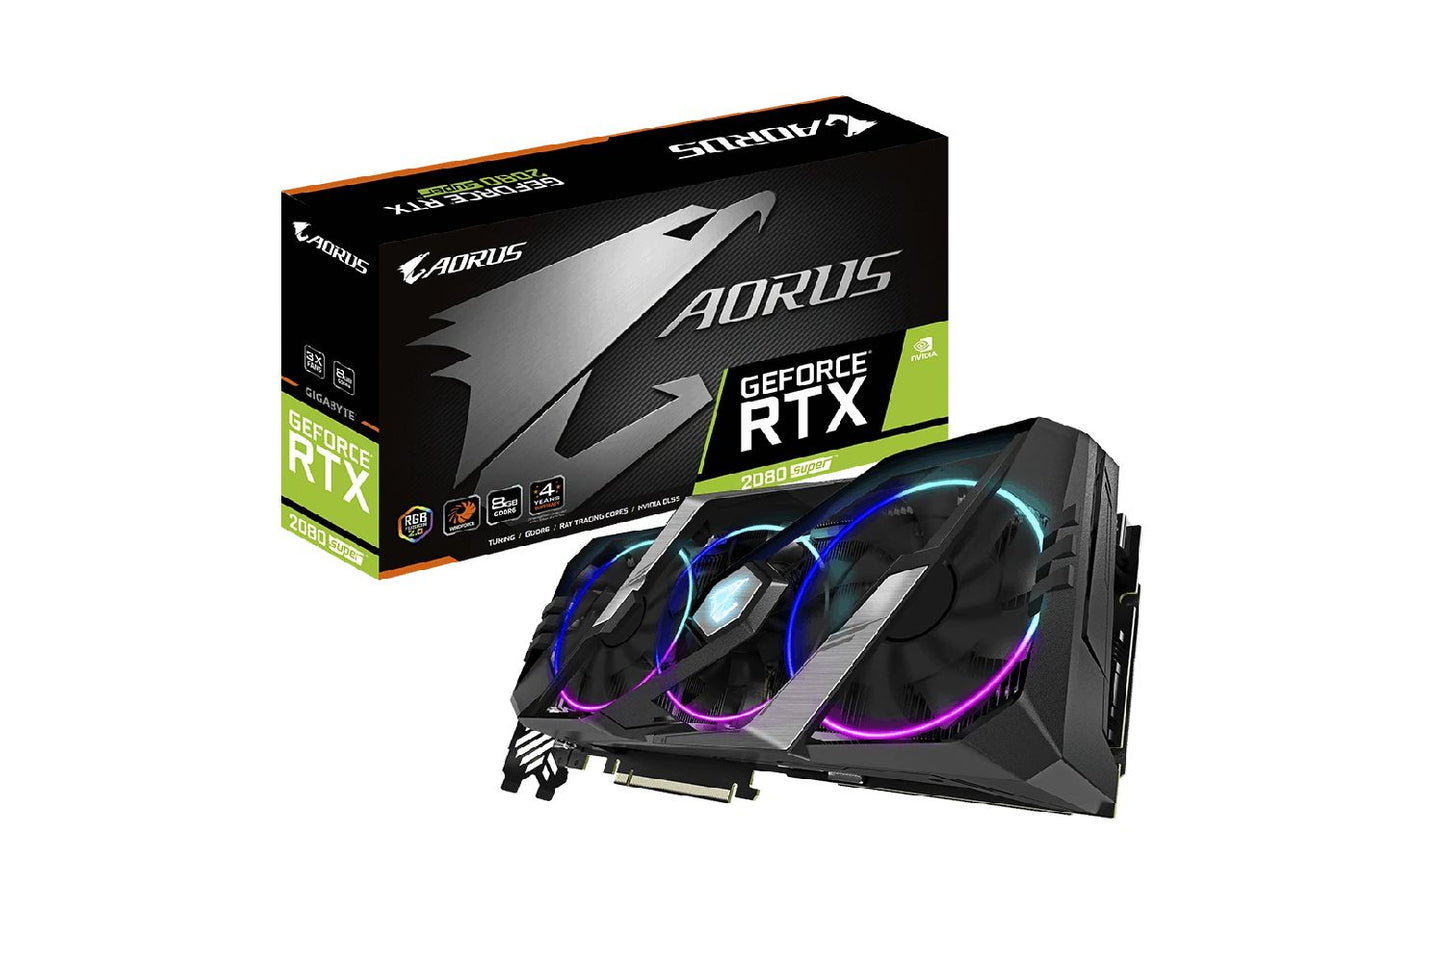 AORUS GeForce RTX 2080 SUPER 8G Graphics Card